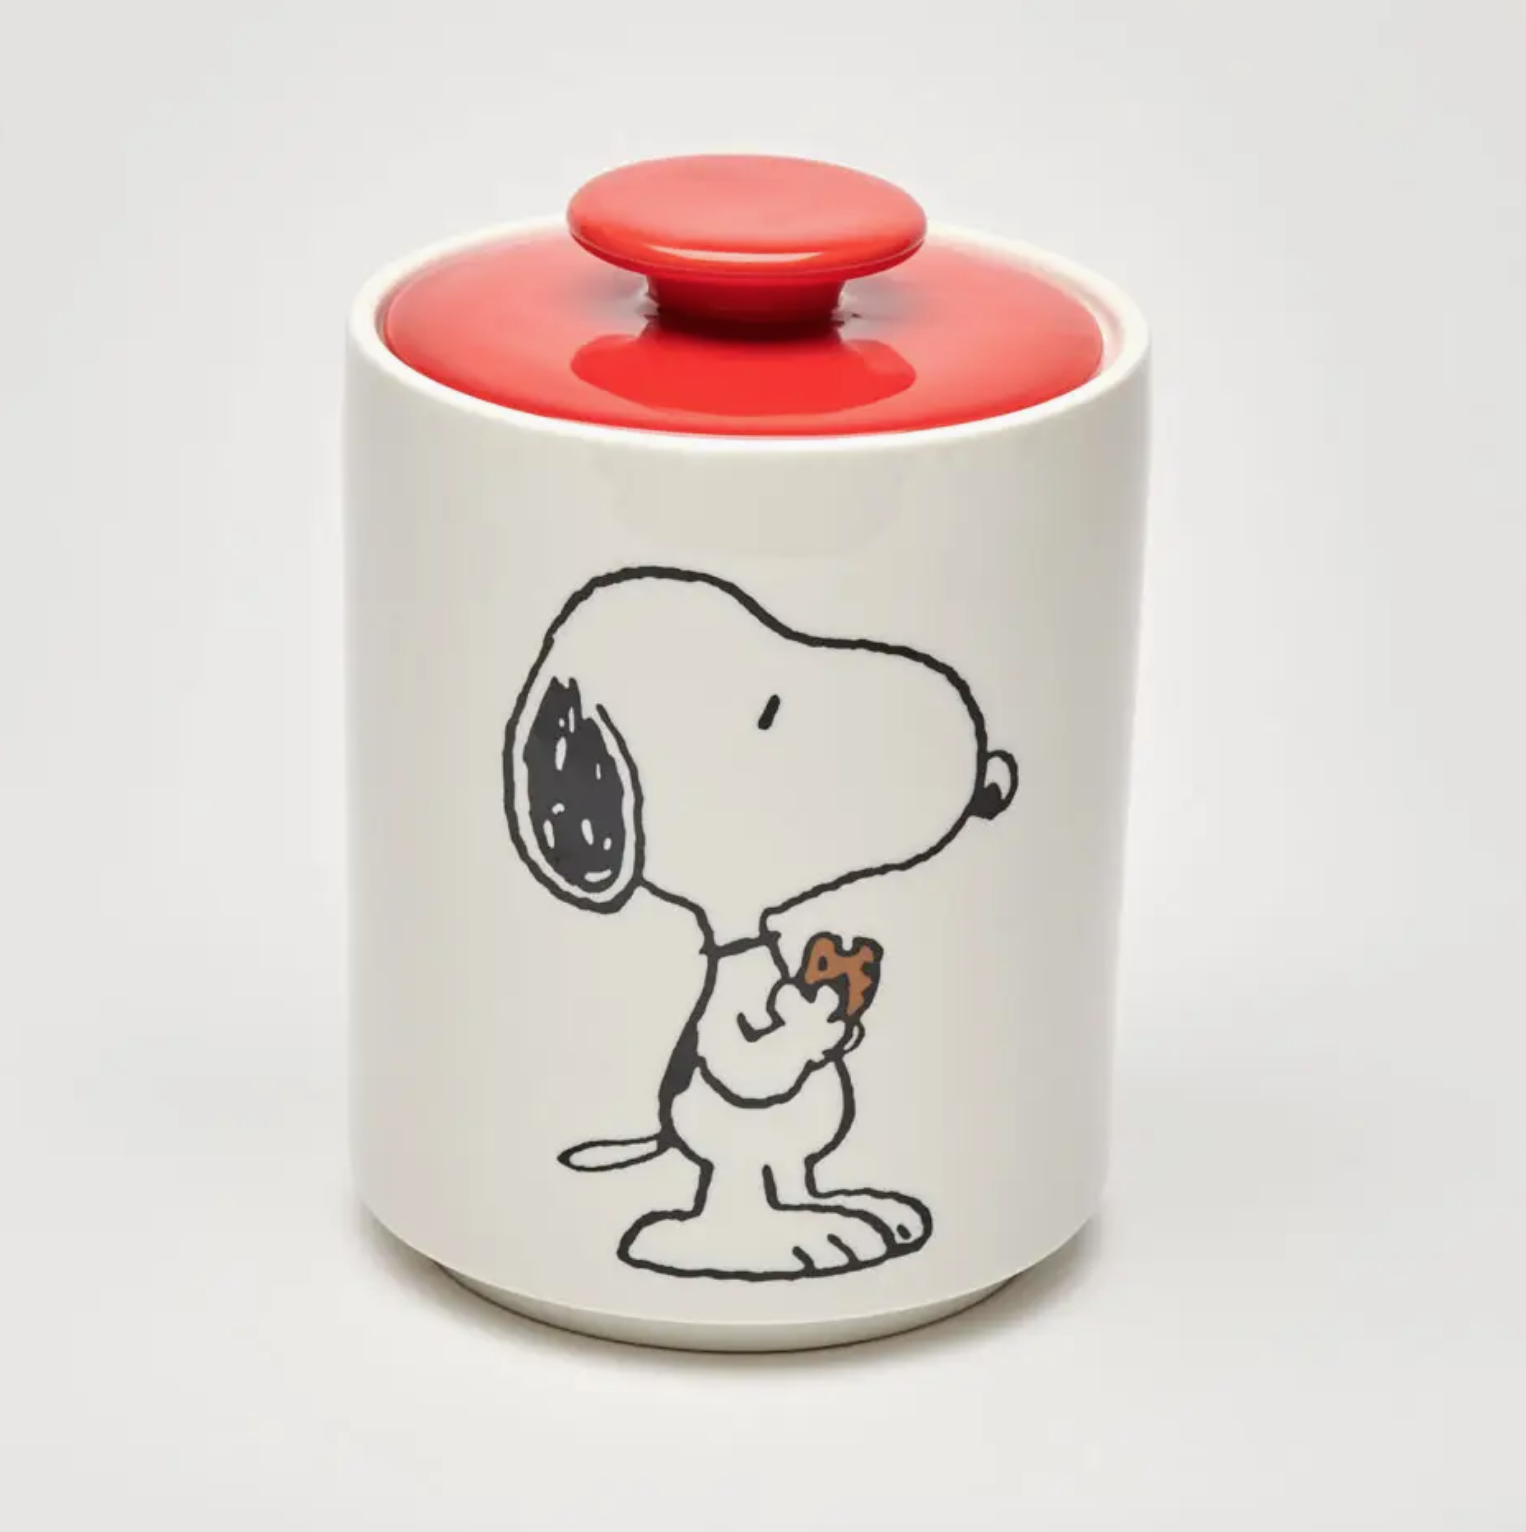 Peanuts Snoopy Cookie Jar x Magpie